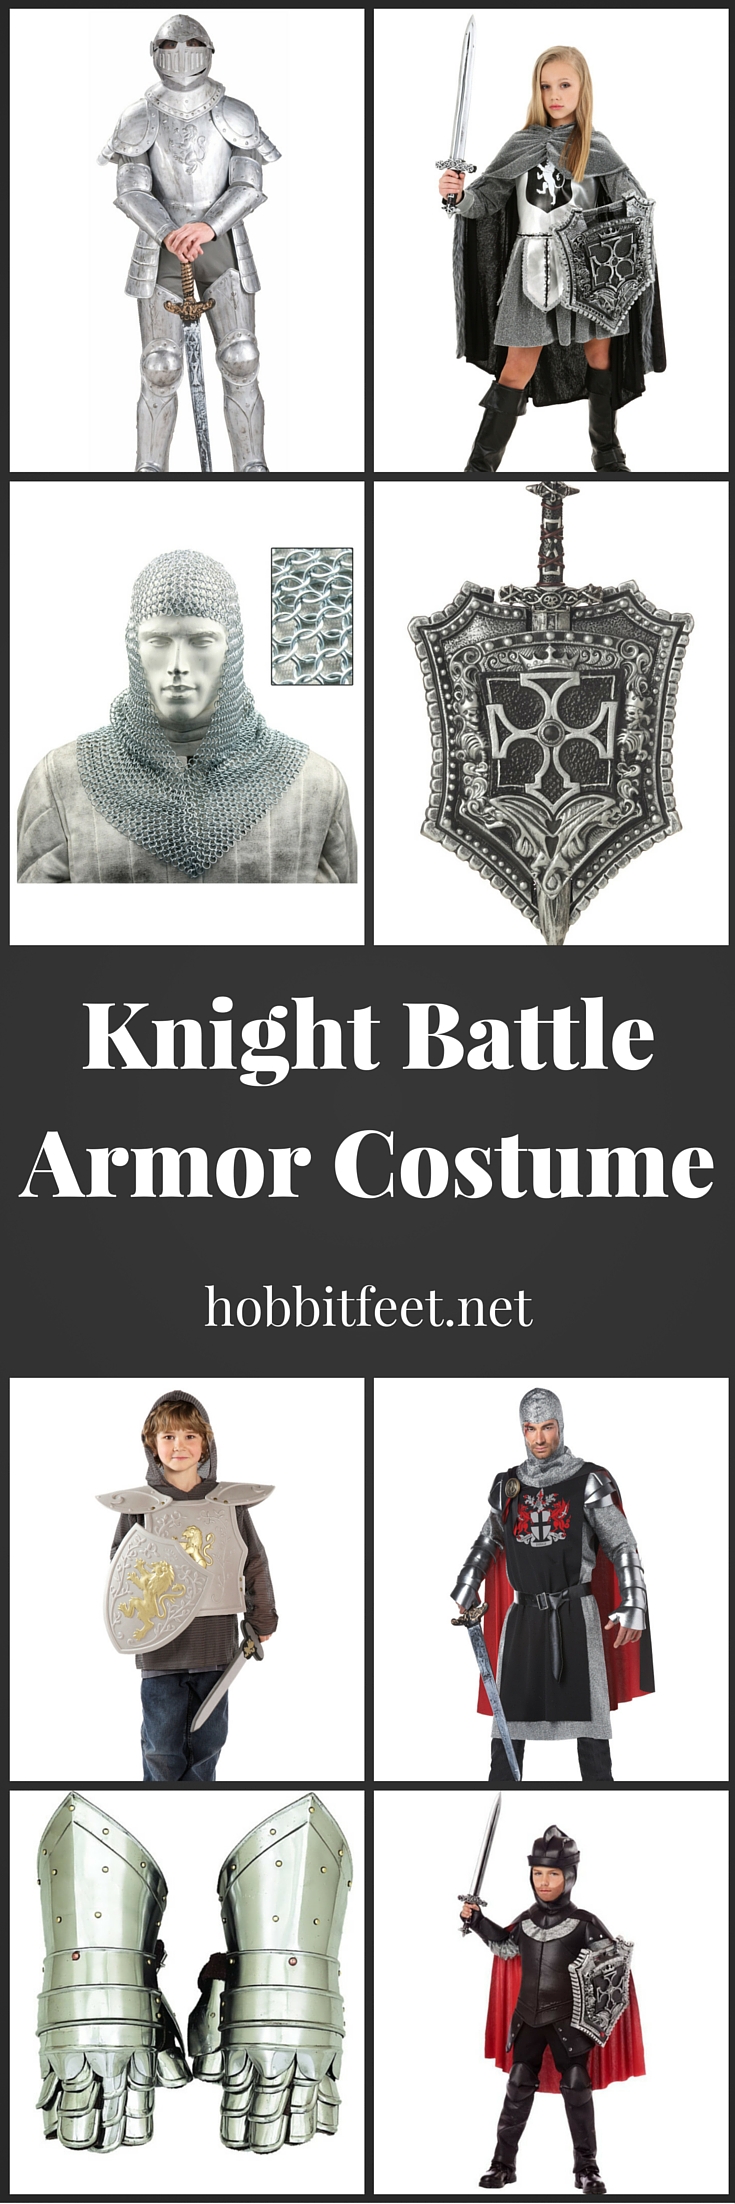 Knight Battle Armor Costume